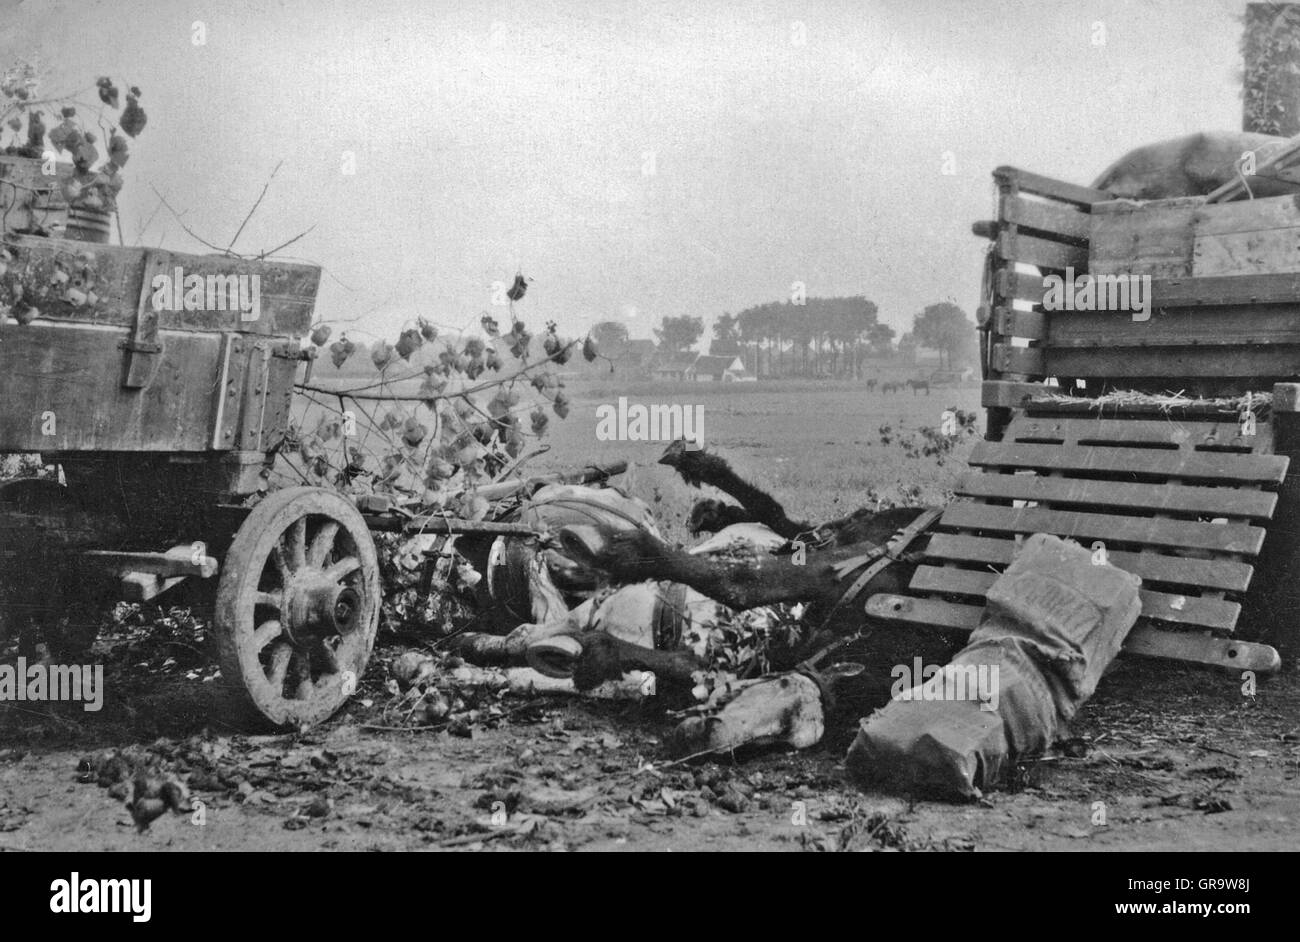 Death And Destruction In World War Ii In 1940 In Belgium ...